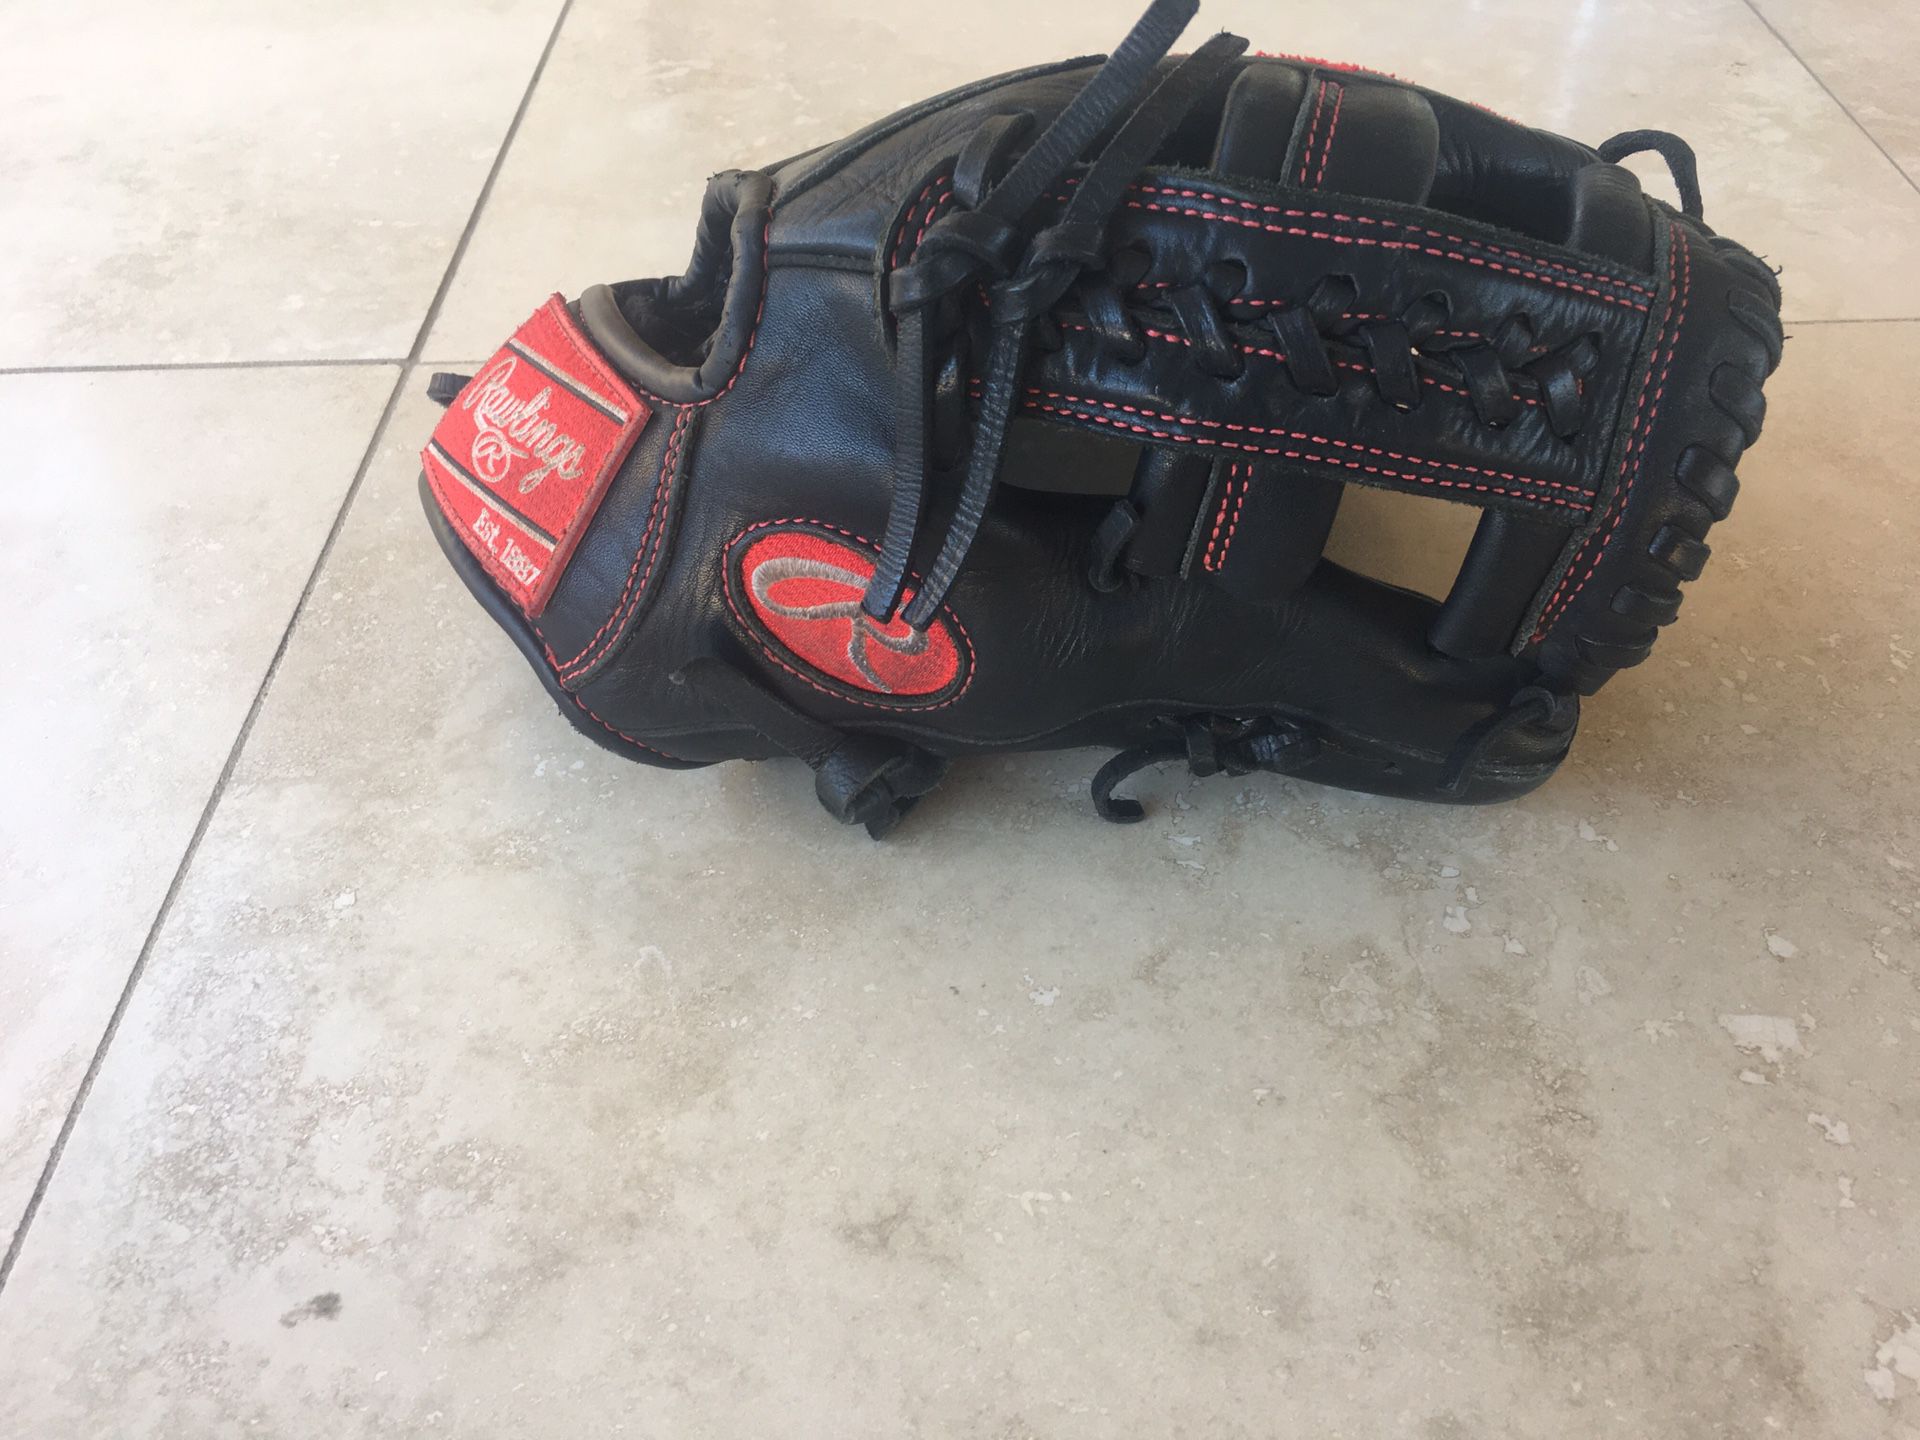 Rawlings “Gamer Series” GYPT1-1B Baseball Glove - 11 inch